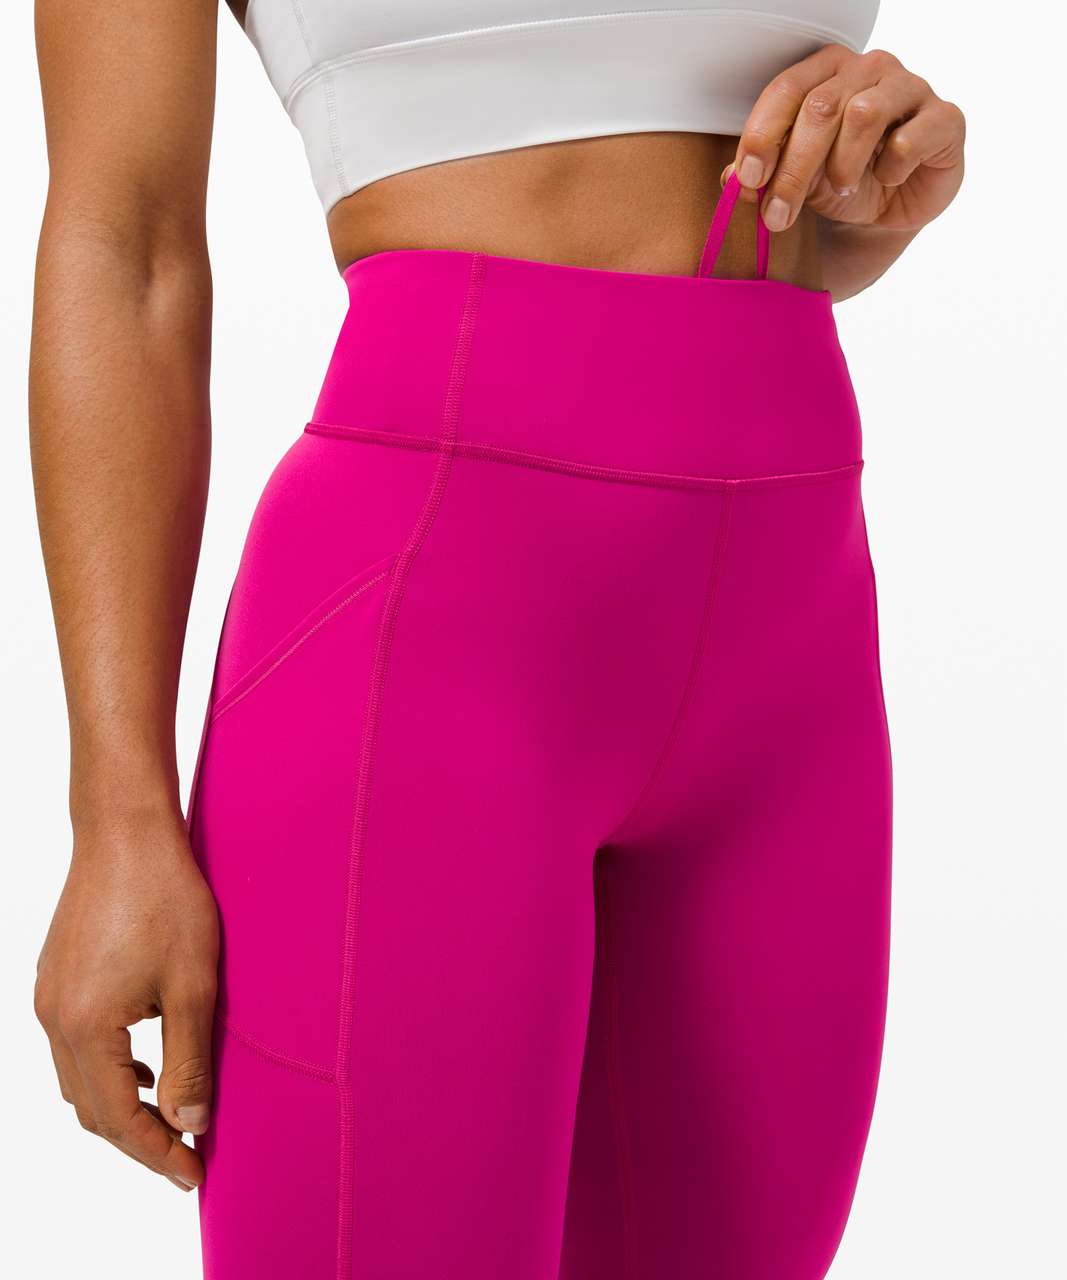 Lululemon Invigorate High-Rise Tights 28 - ShopStyle Activewear Pants